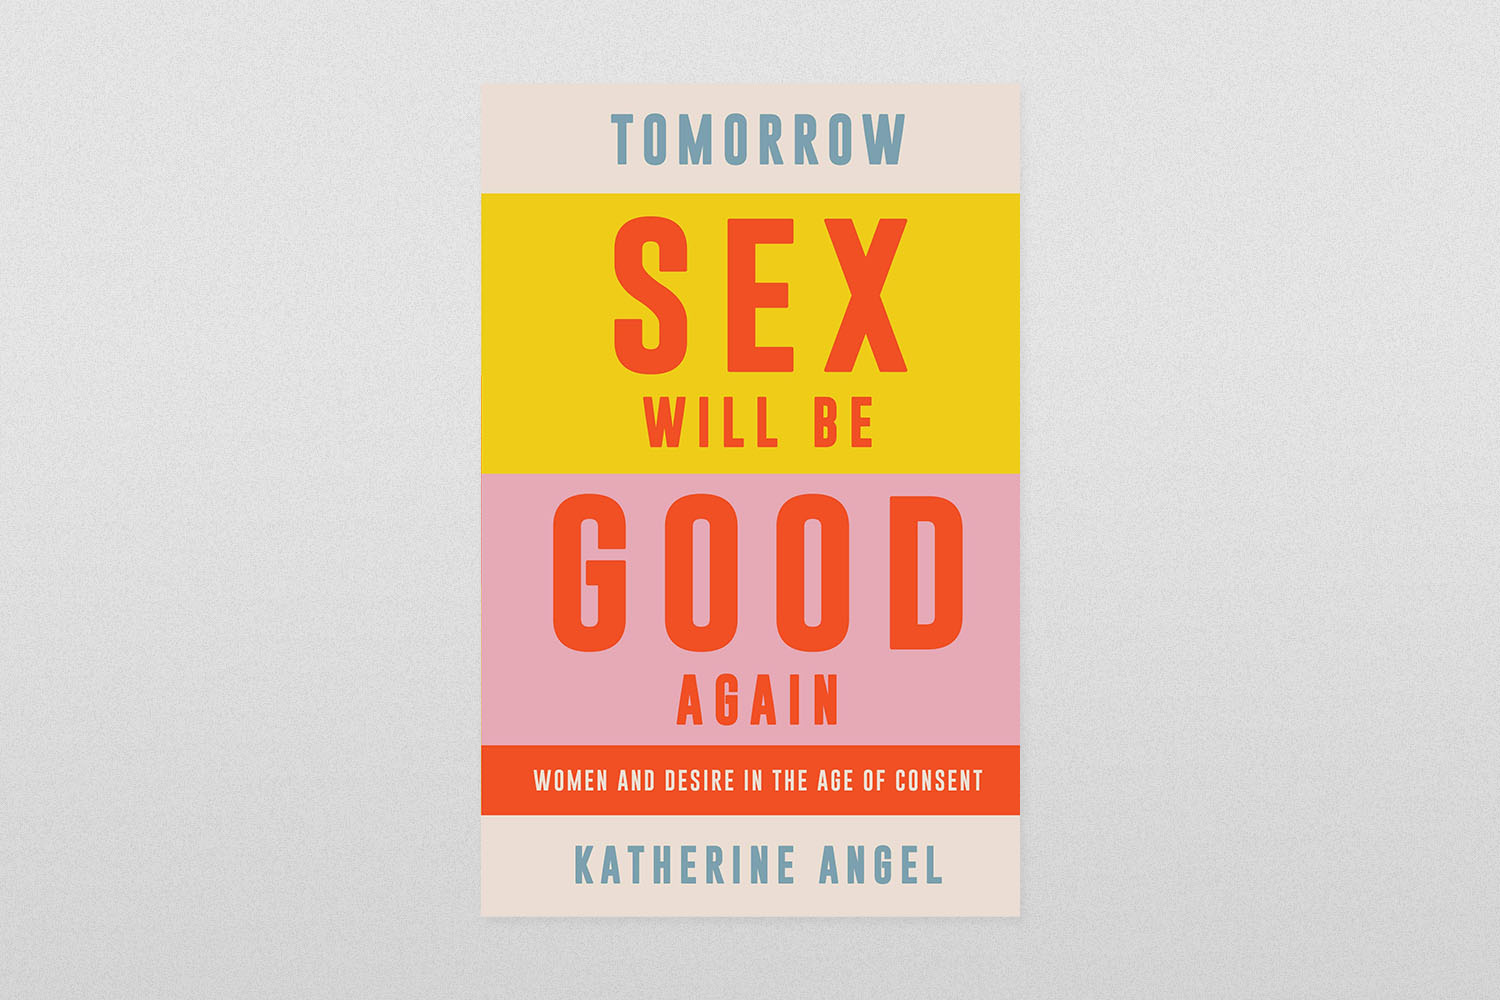 "Tomorrow Sex Will Be Good Again"